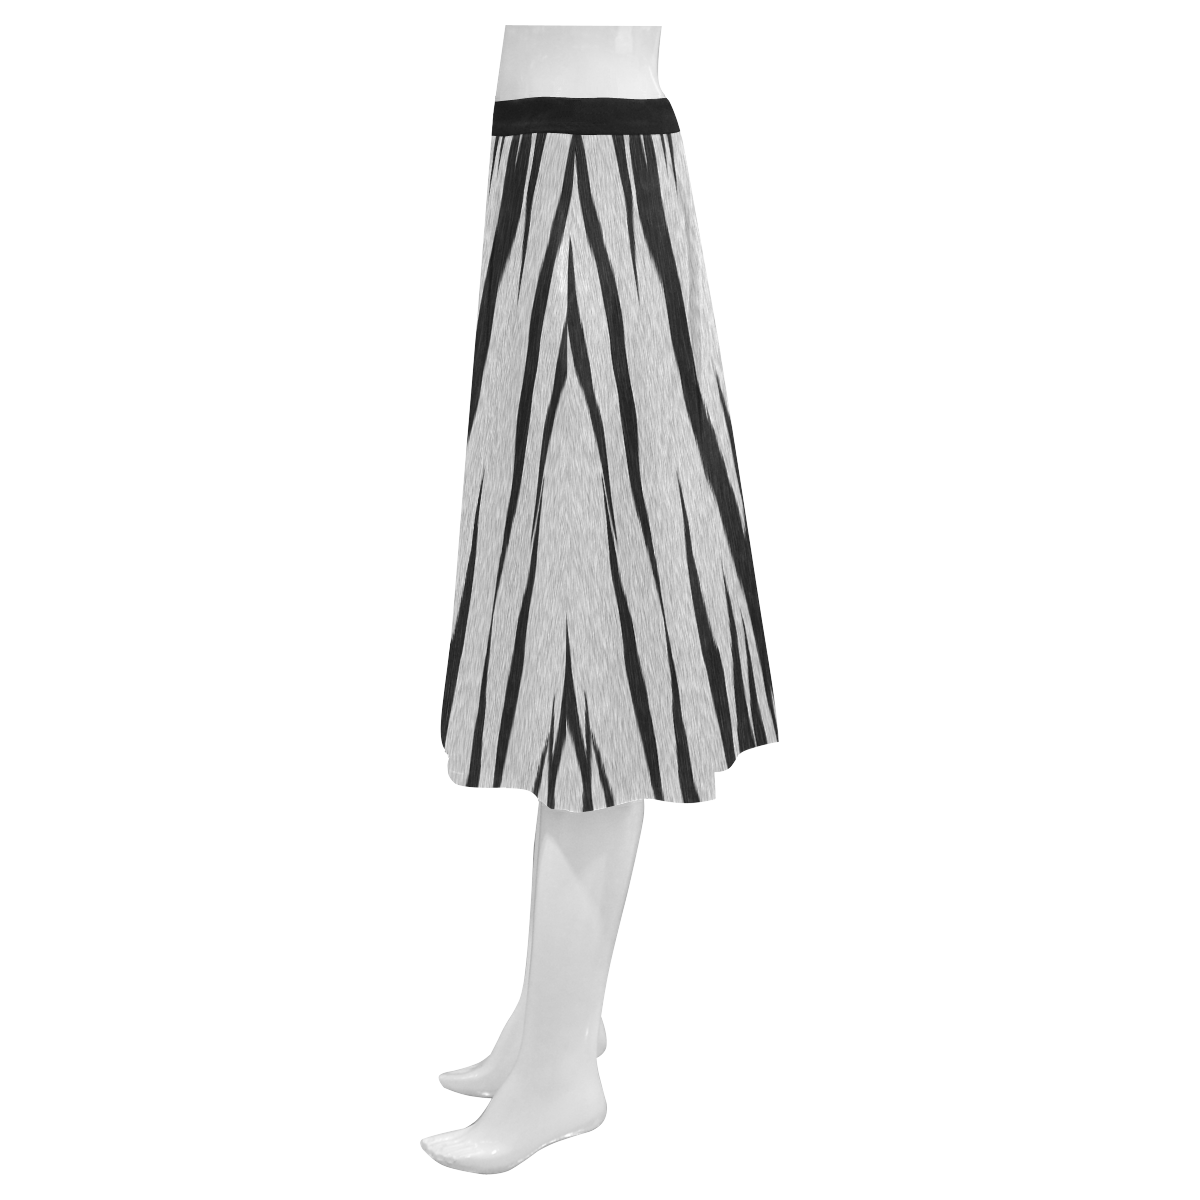 A Trendy Black Silver Big Cat Fur Texture Mnemosyne Women's Crepe Skirt (Model D16)